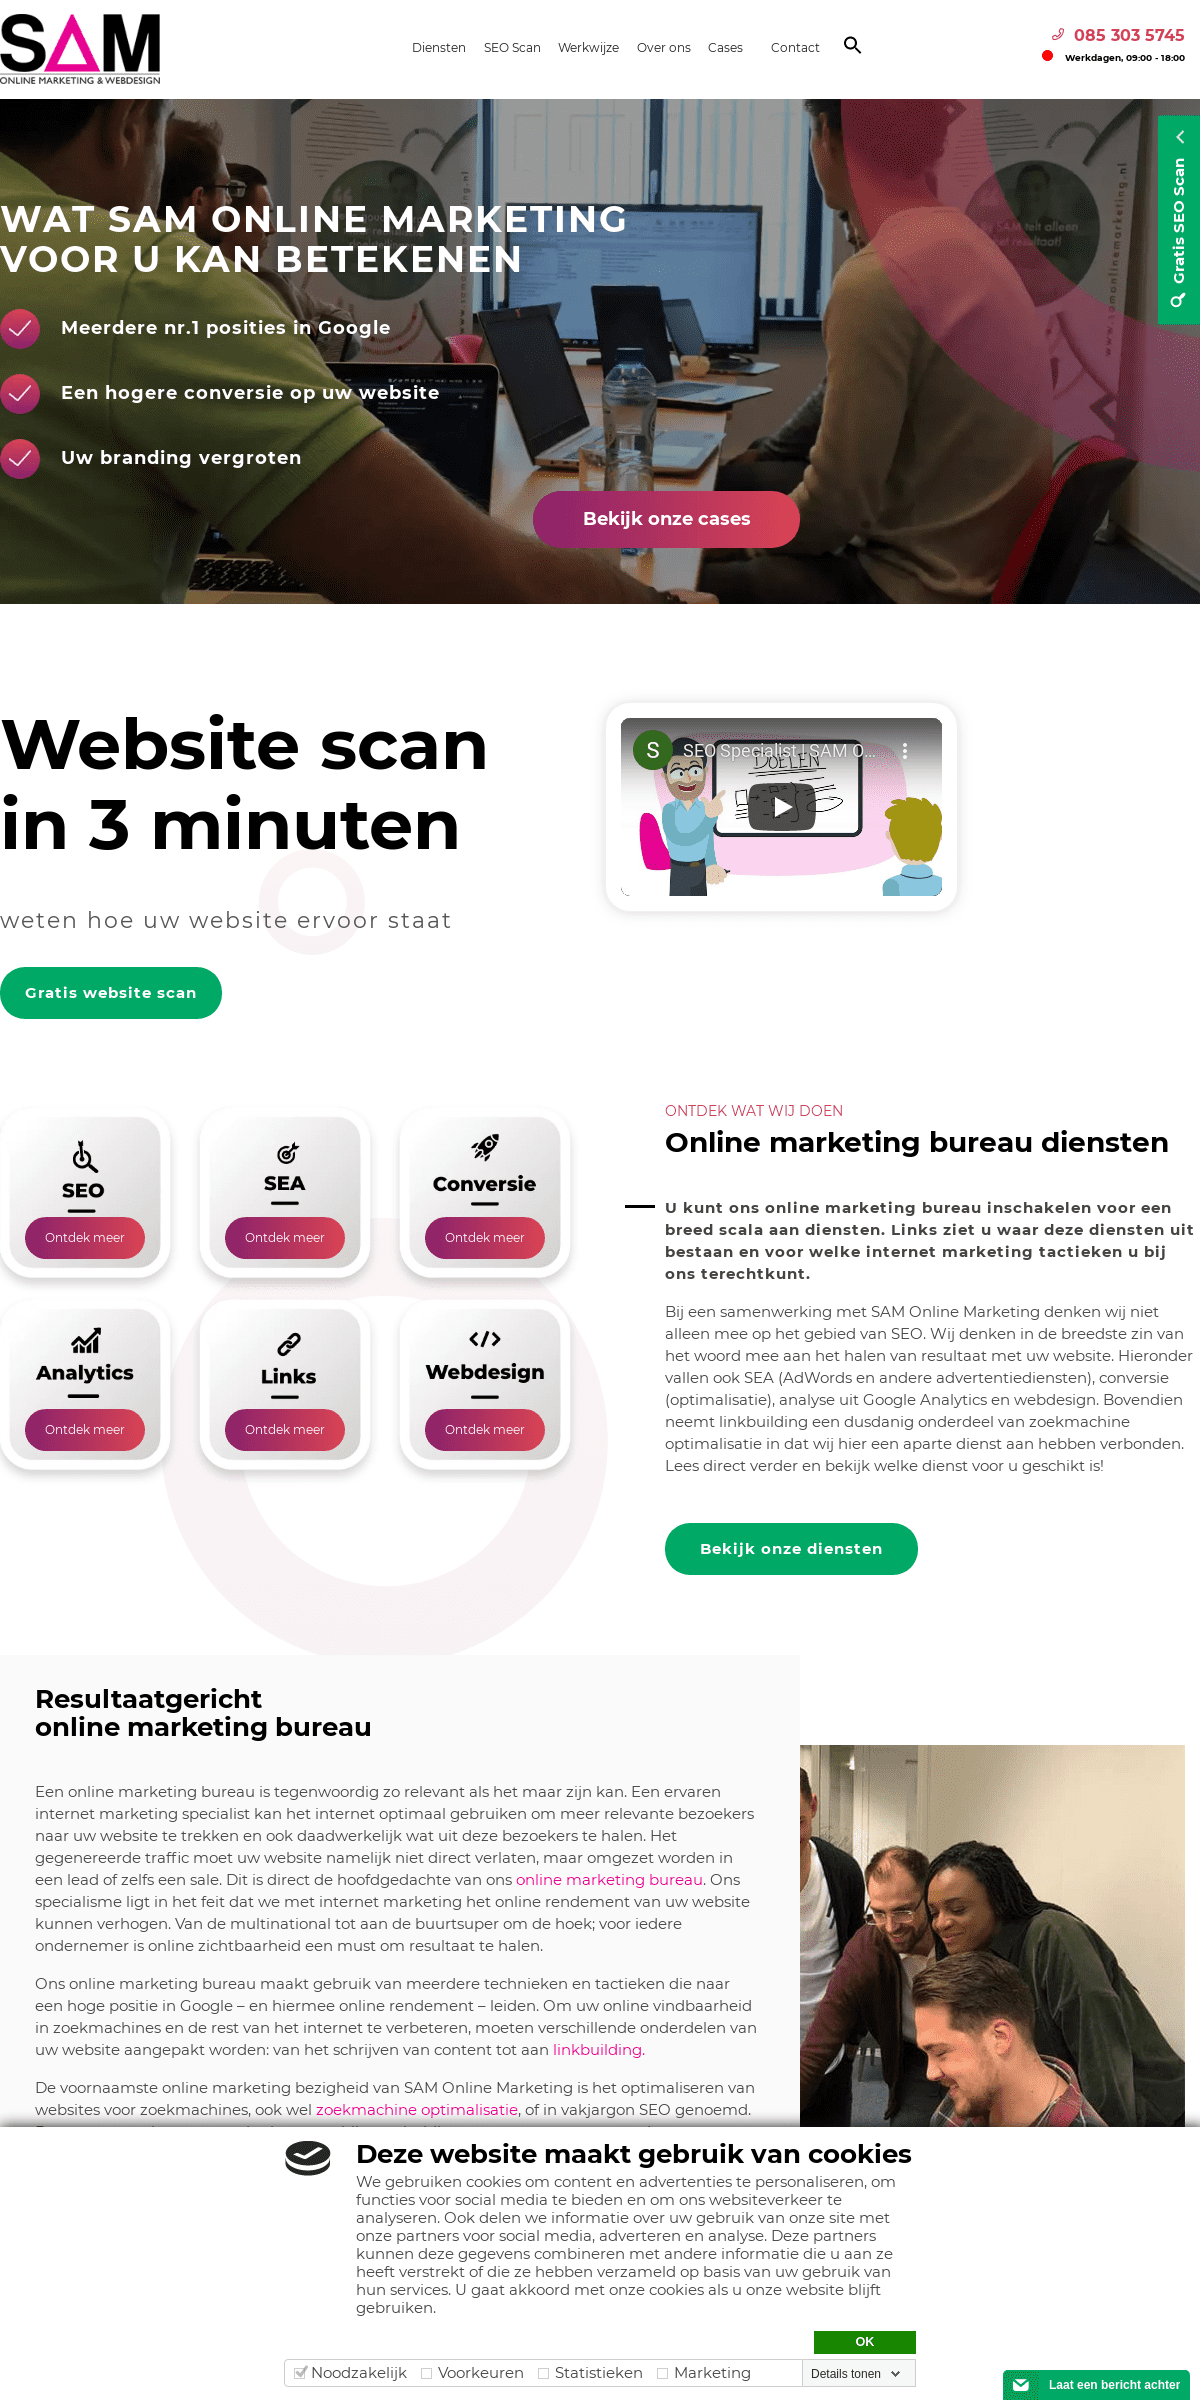 A complete backup of samonlinemarketing.nl